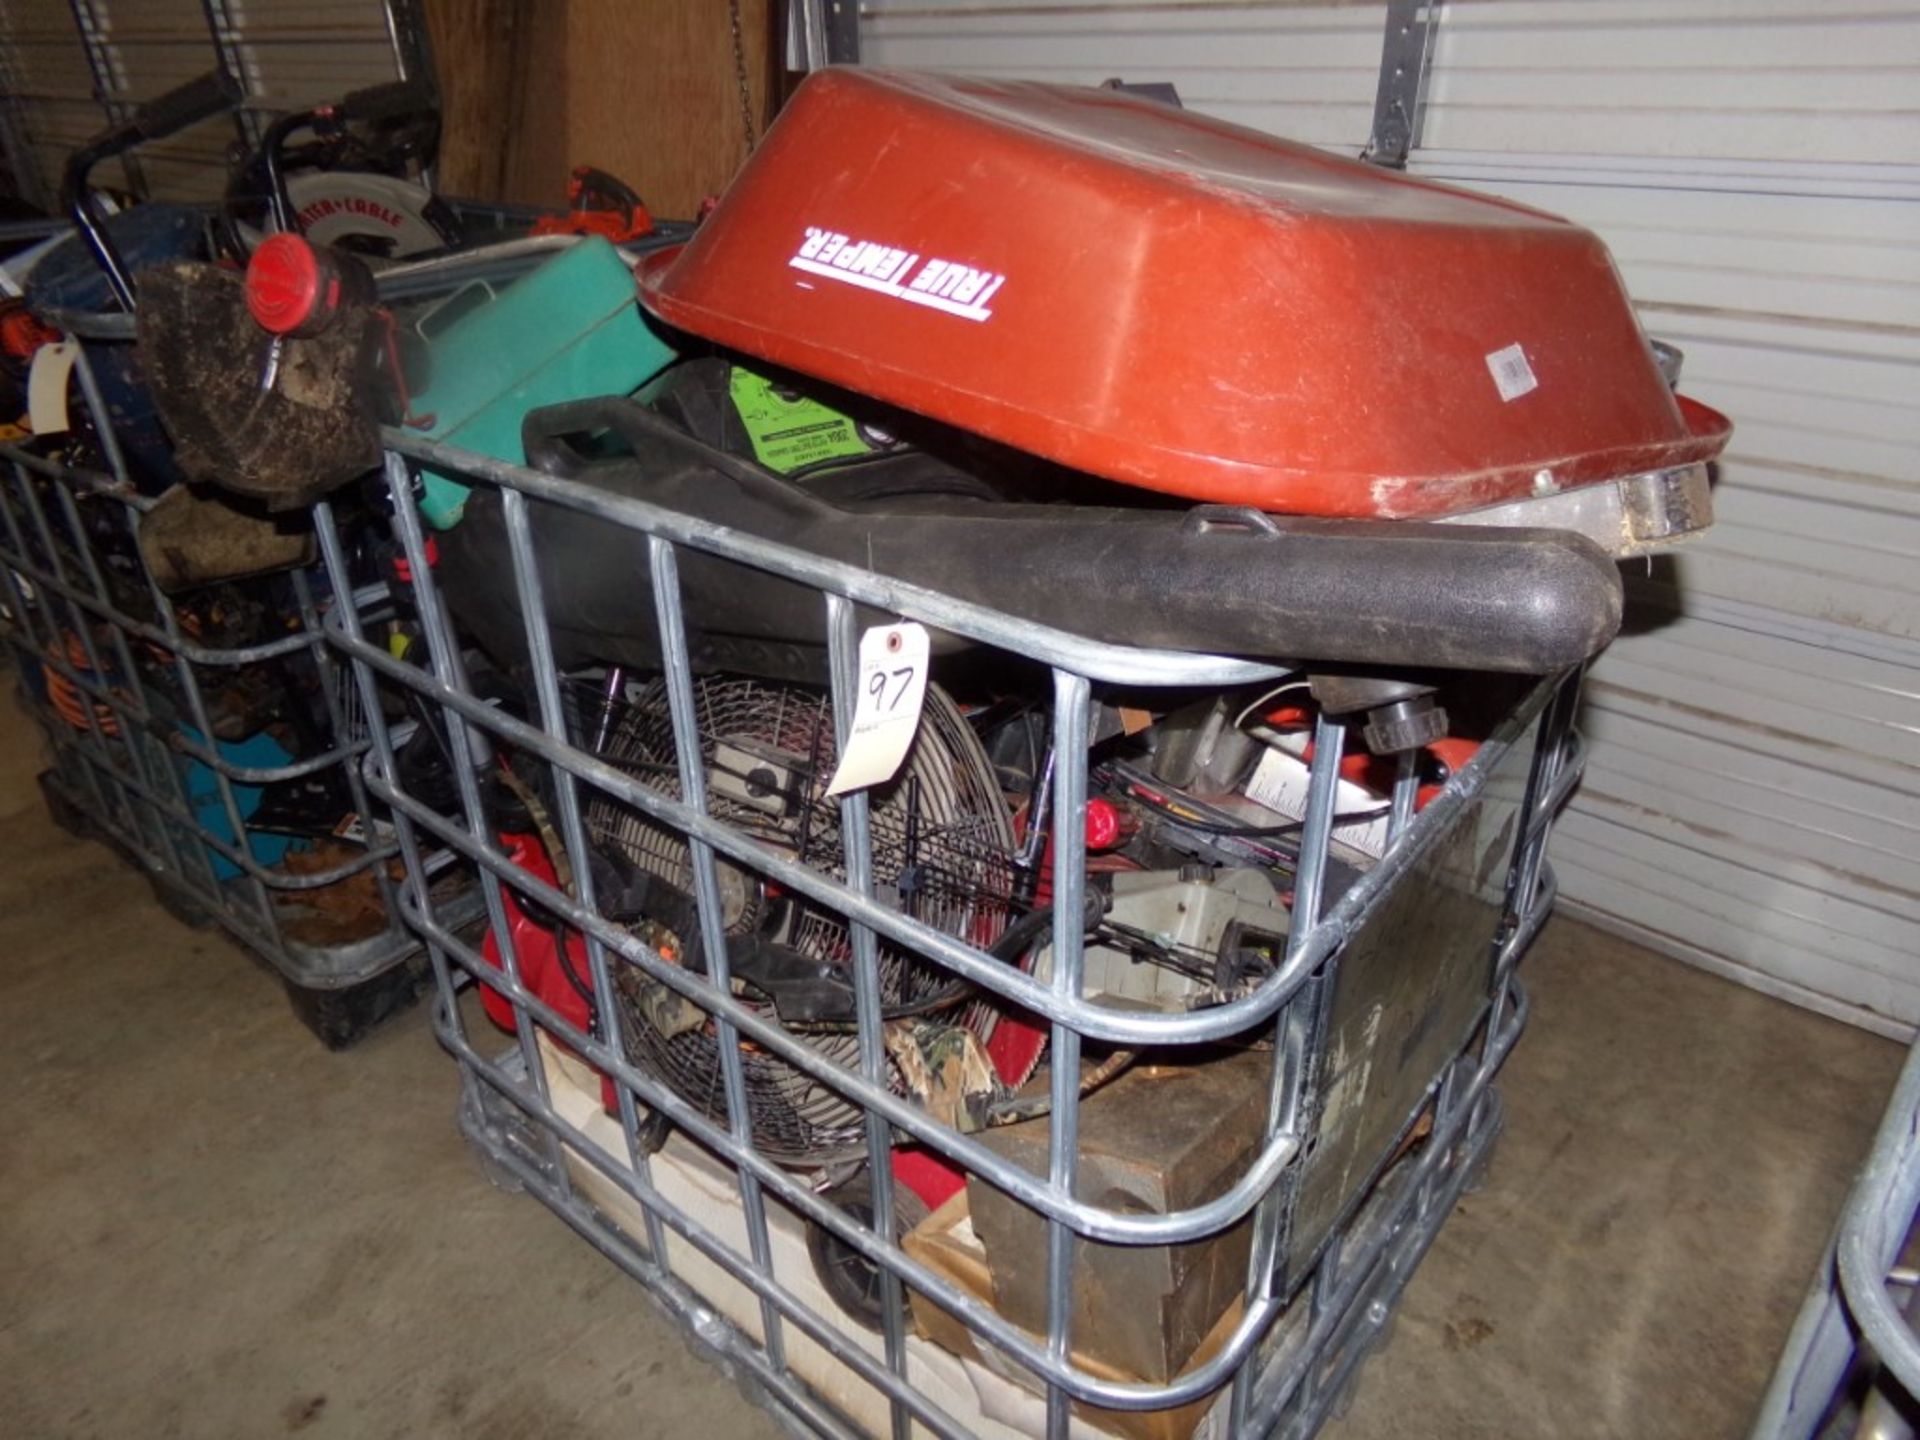 Caged Pallet Deal Skid, Wheel Barrel Parts, Poly Gun Cases, Fan, Compound Bows, Portble Air Tank,